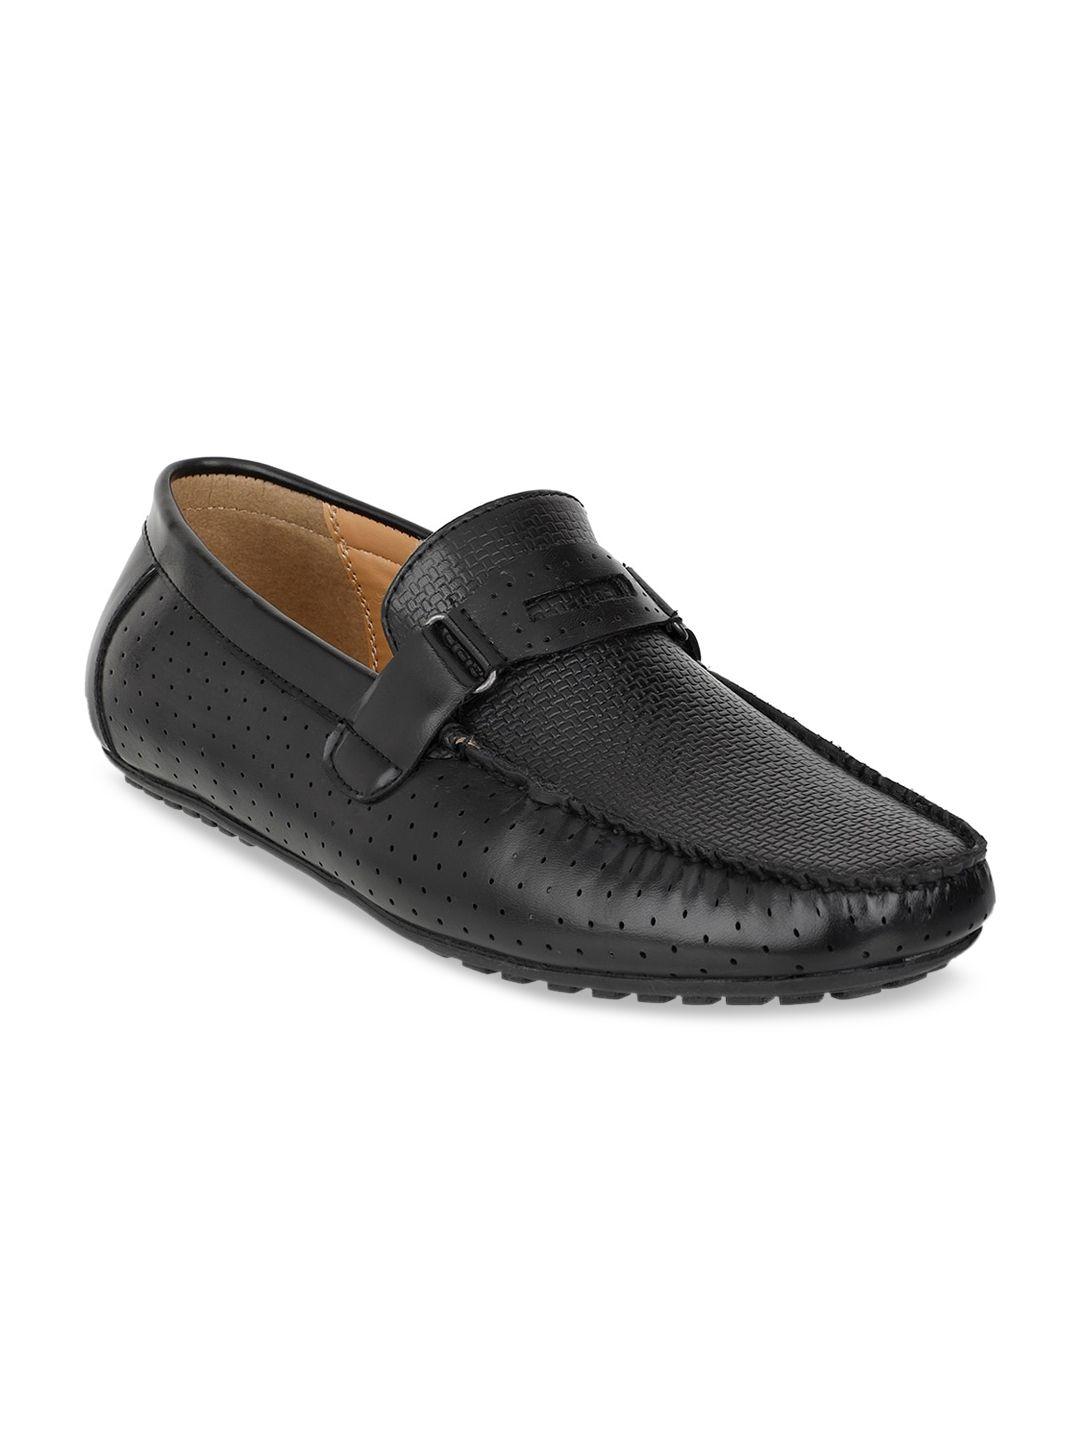 carlton london men black perforations loafers